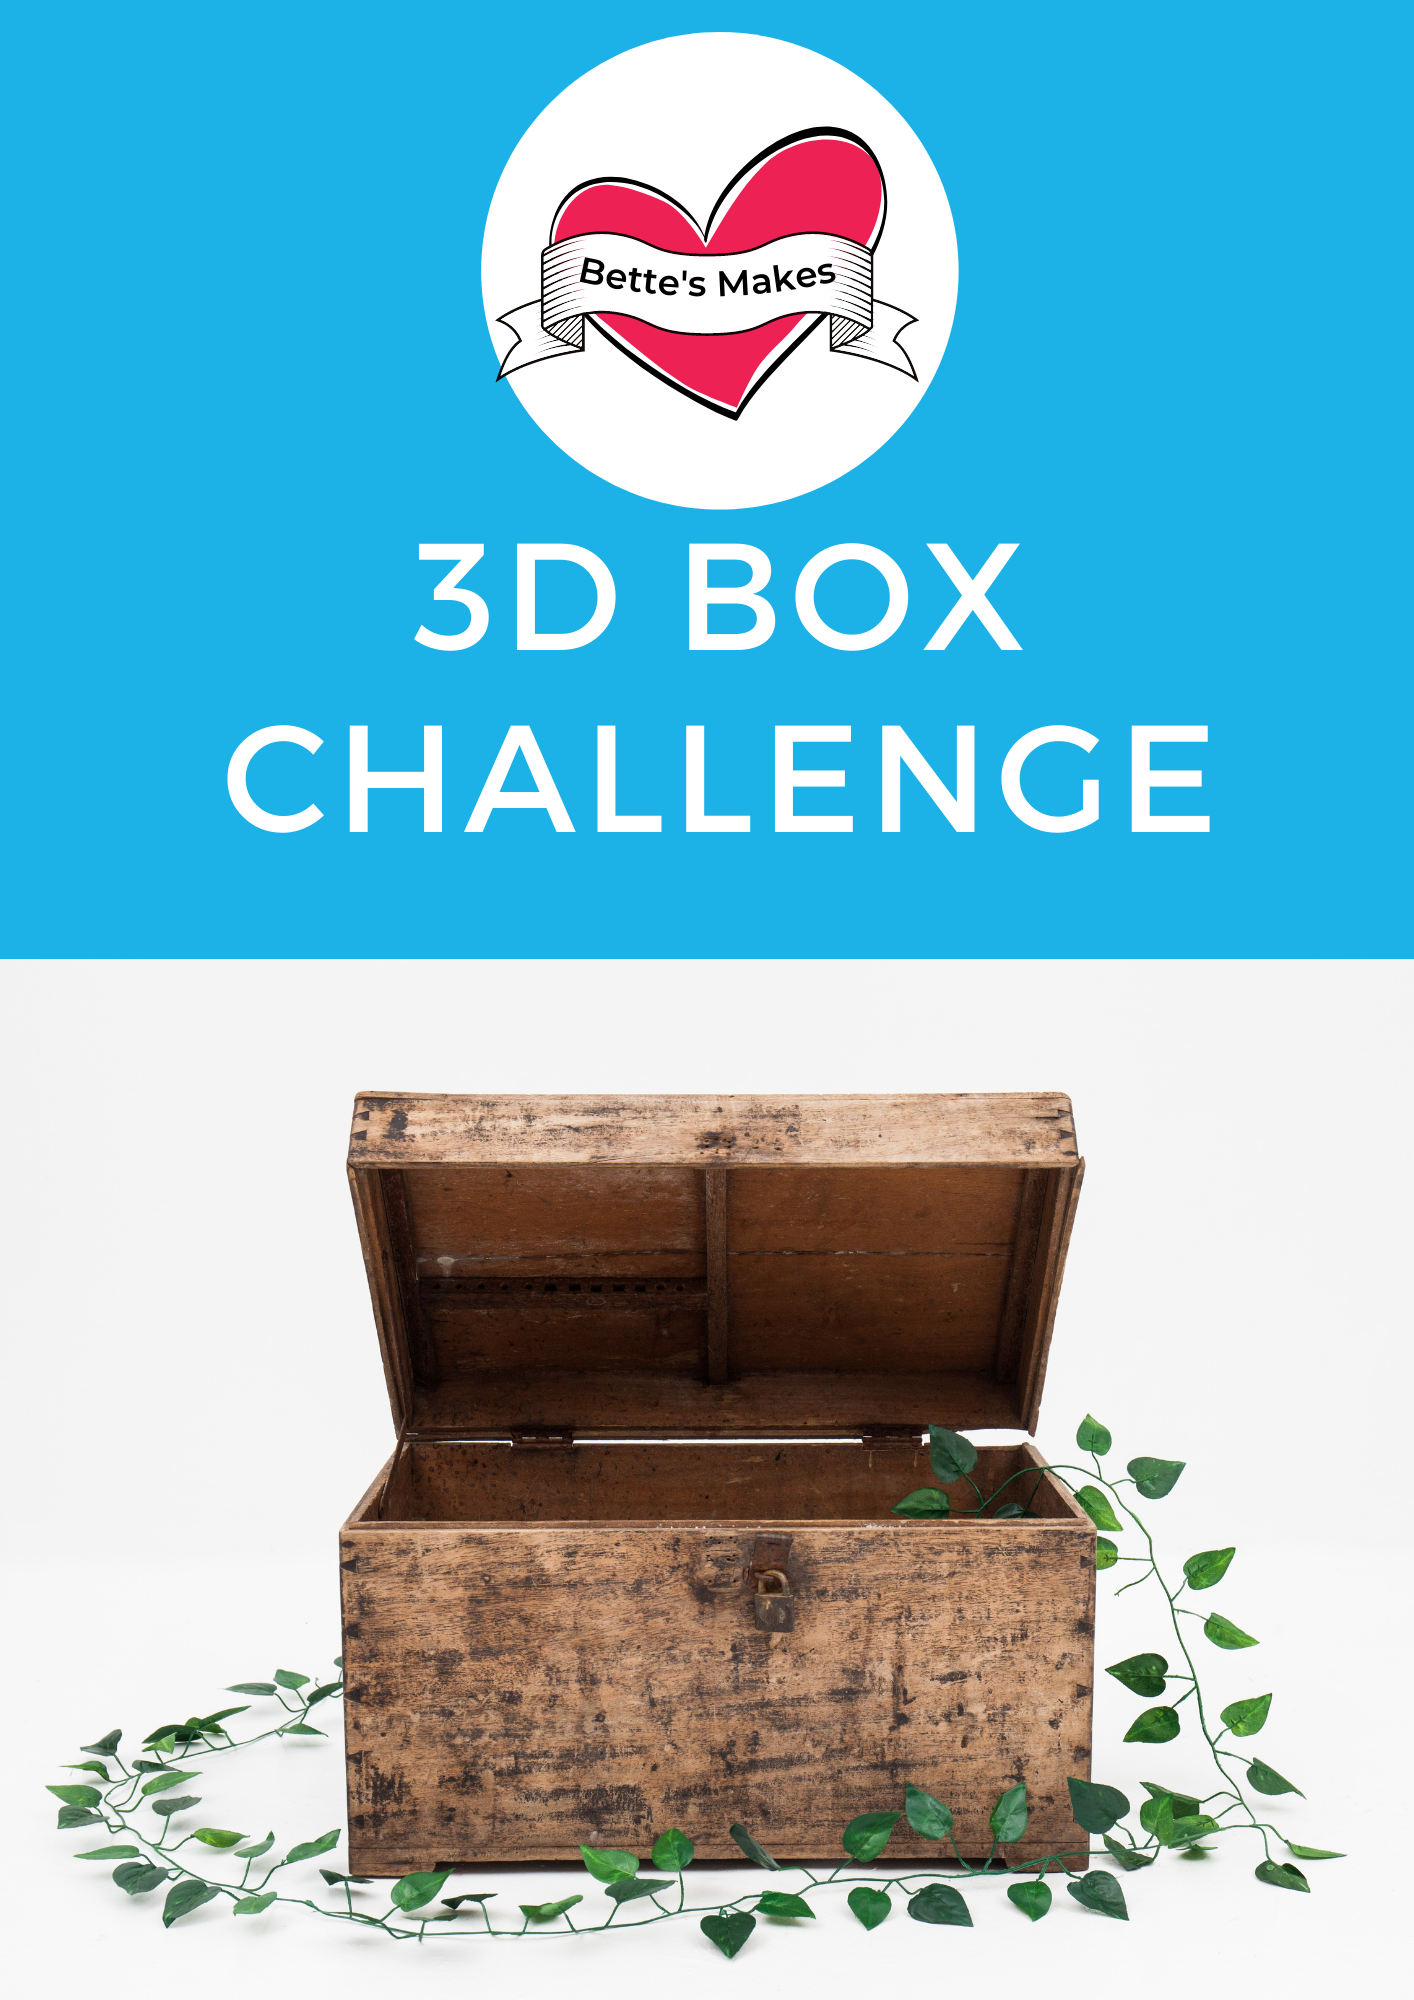 3D Box Challenge - Starts April 15, 2022